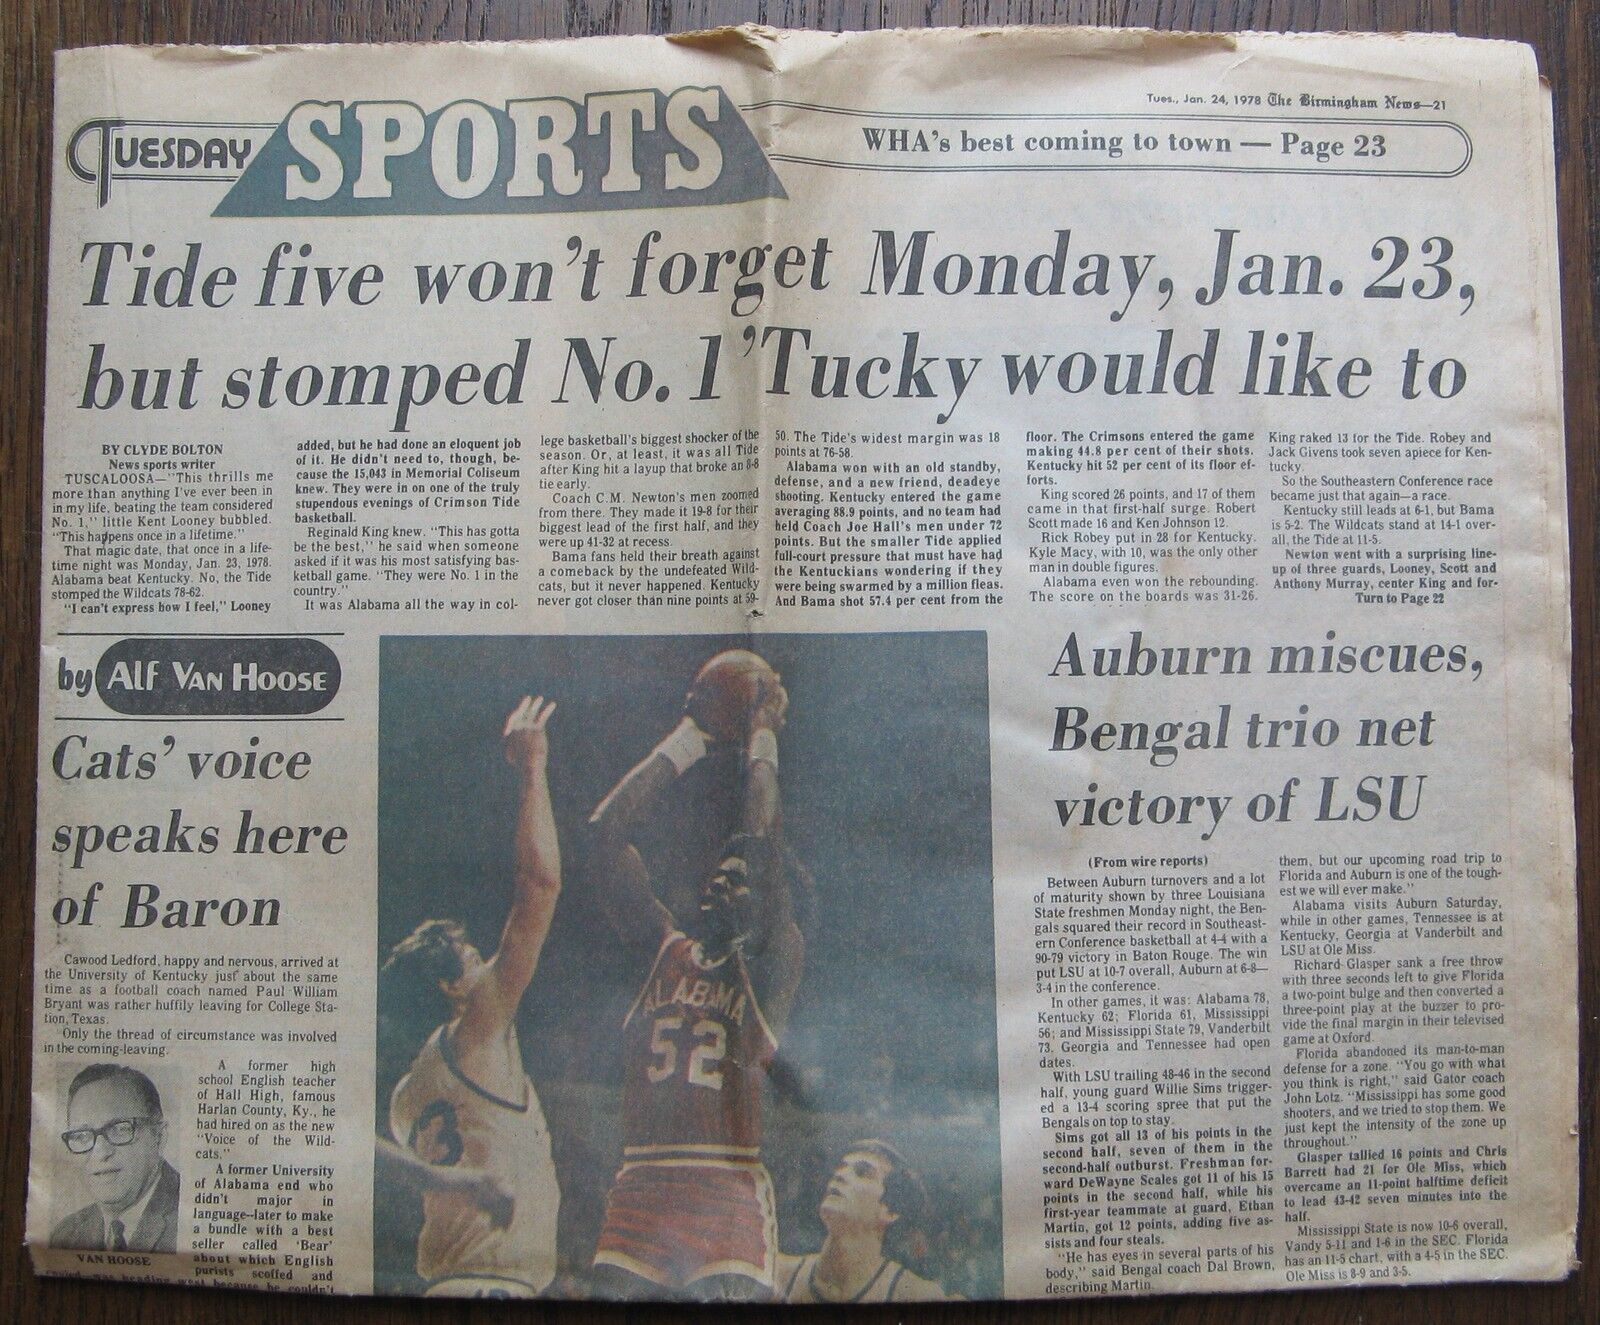 Jan. 24, 1978 Binghamton News Sports Section ALABAMA BEATS KENTUCKY basketball